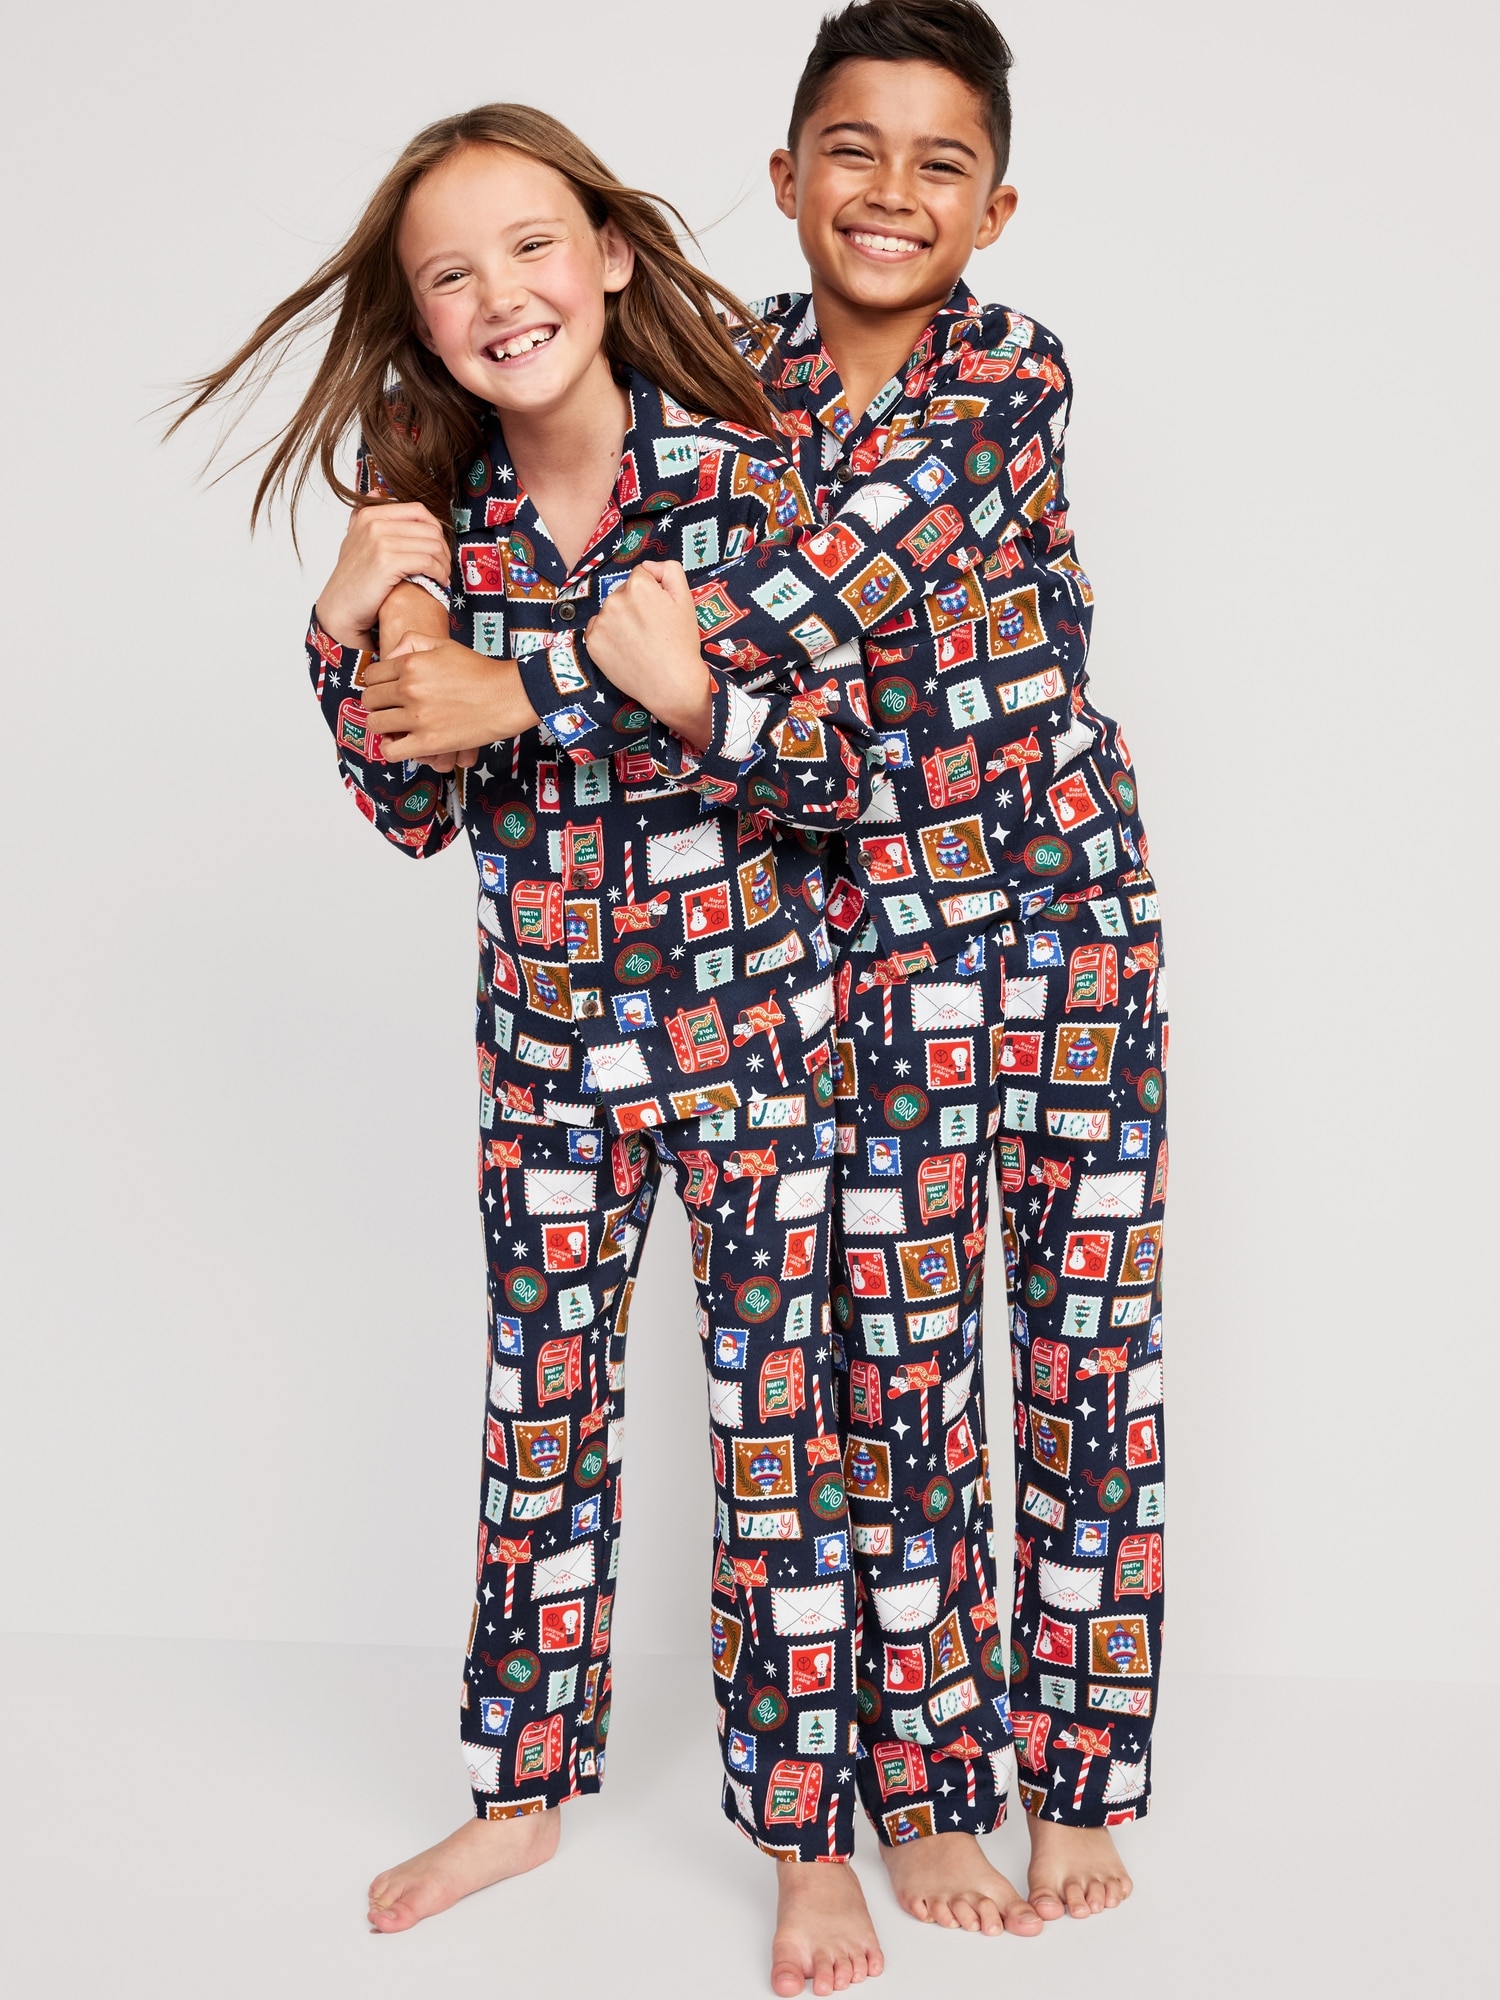 Gender-Neutral Printed Pajama Set for Kids